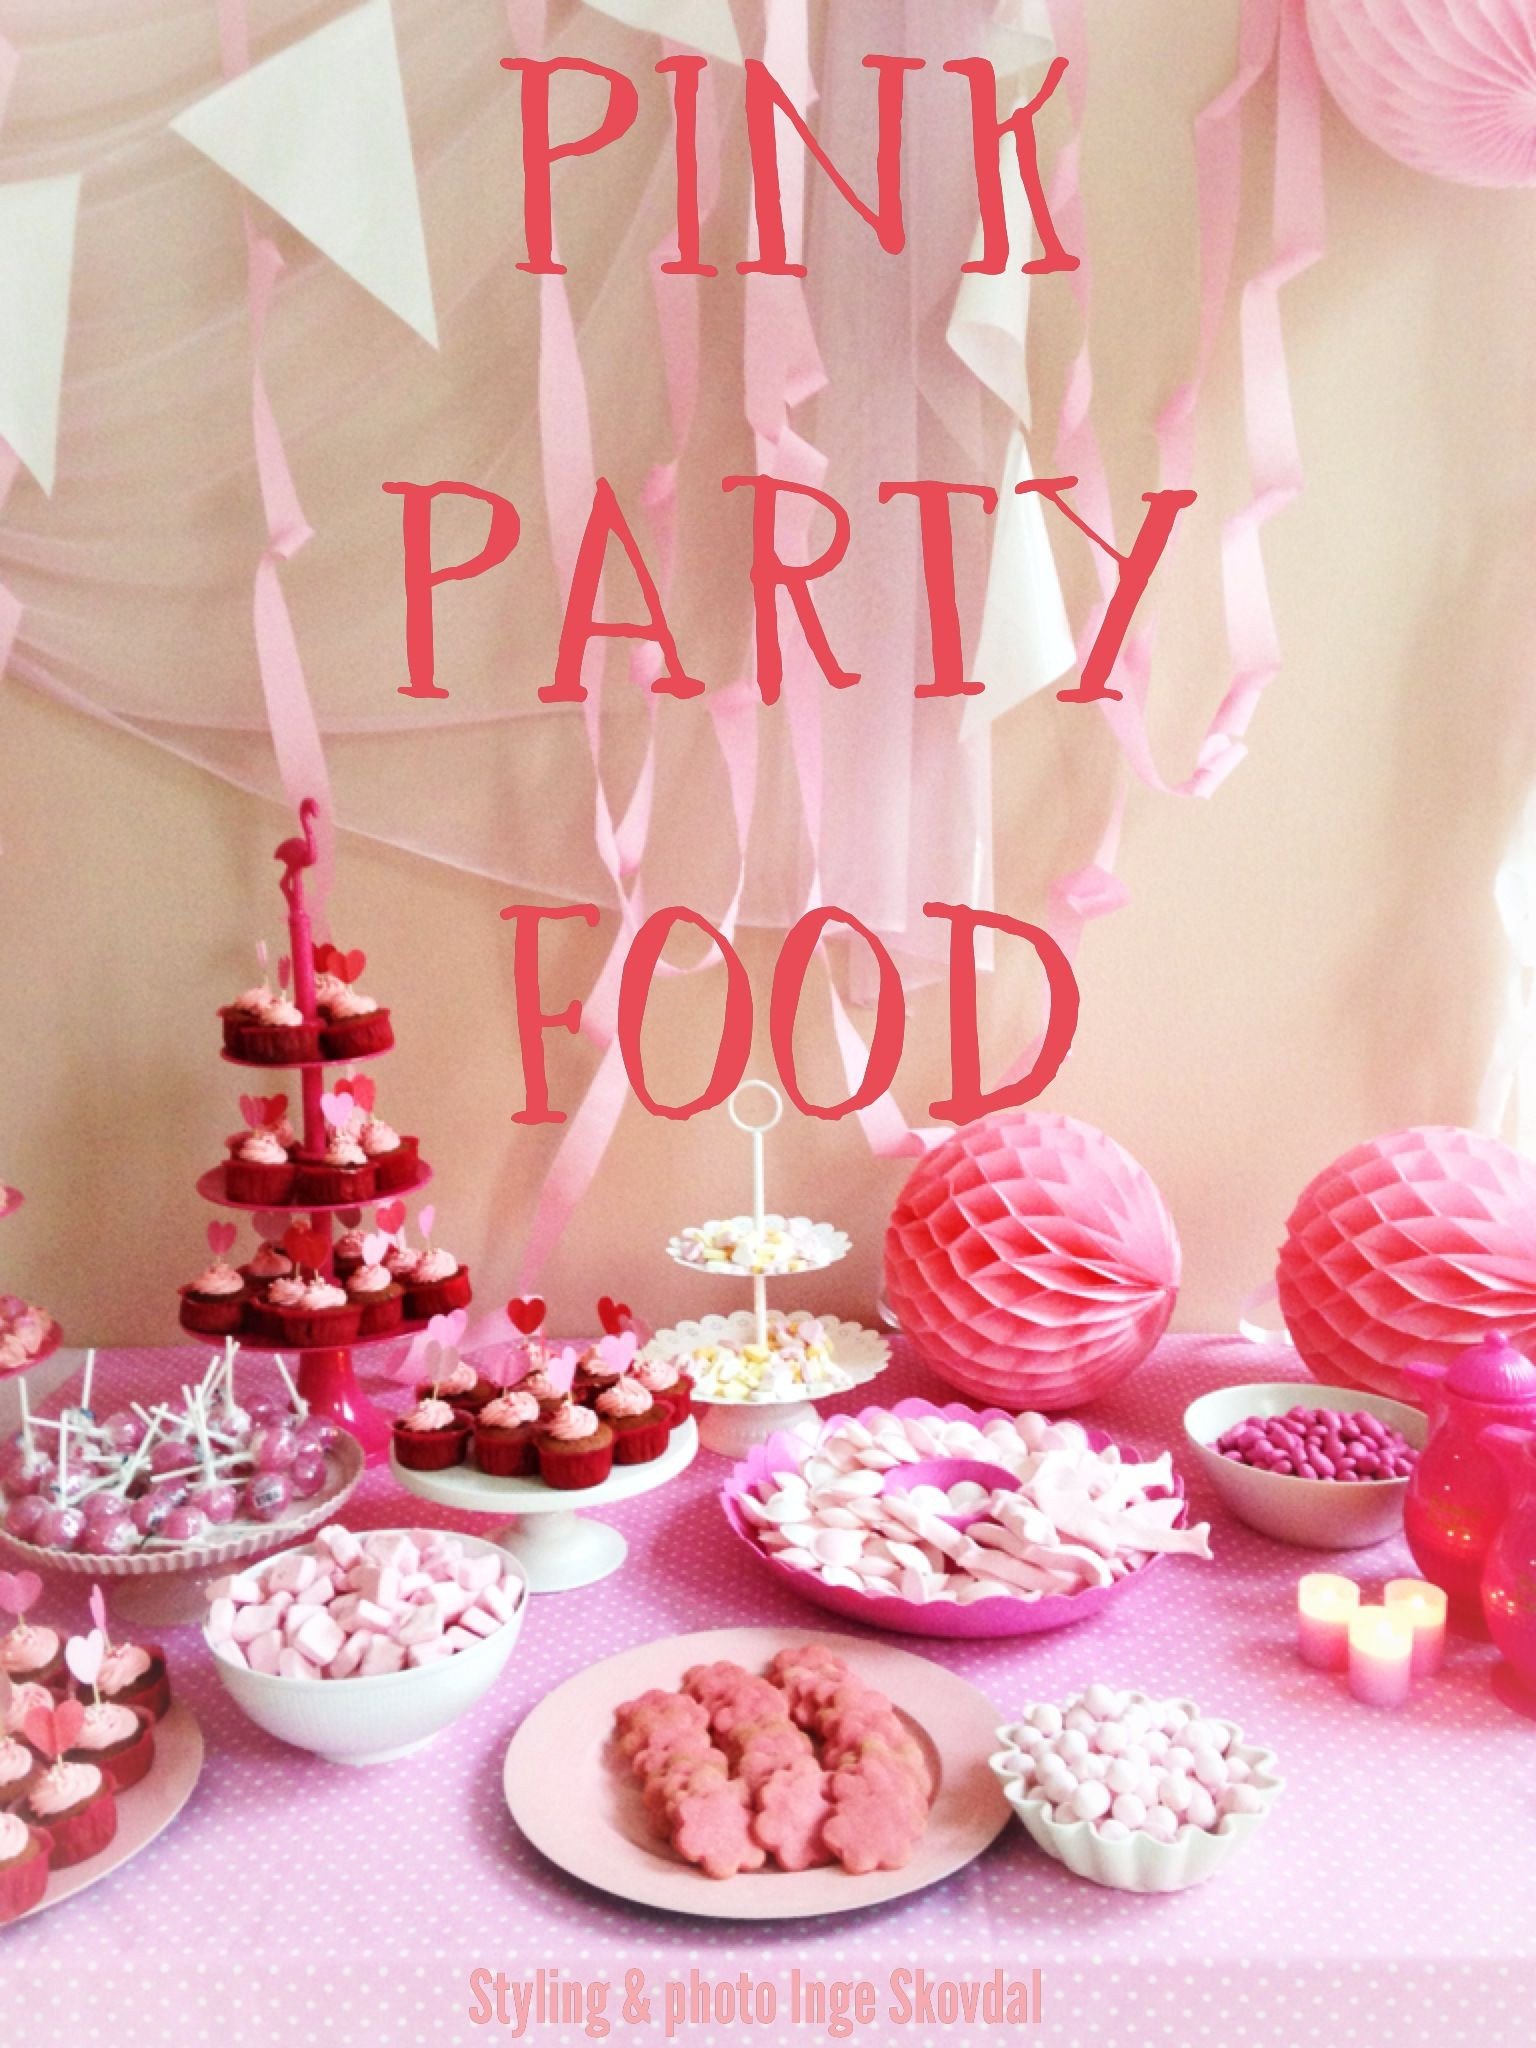 Pink Party Food Ideas
 pink party food Styling & photo Inge Skovdal